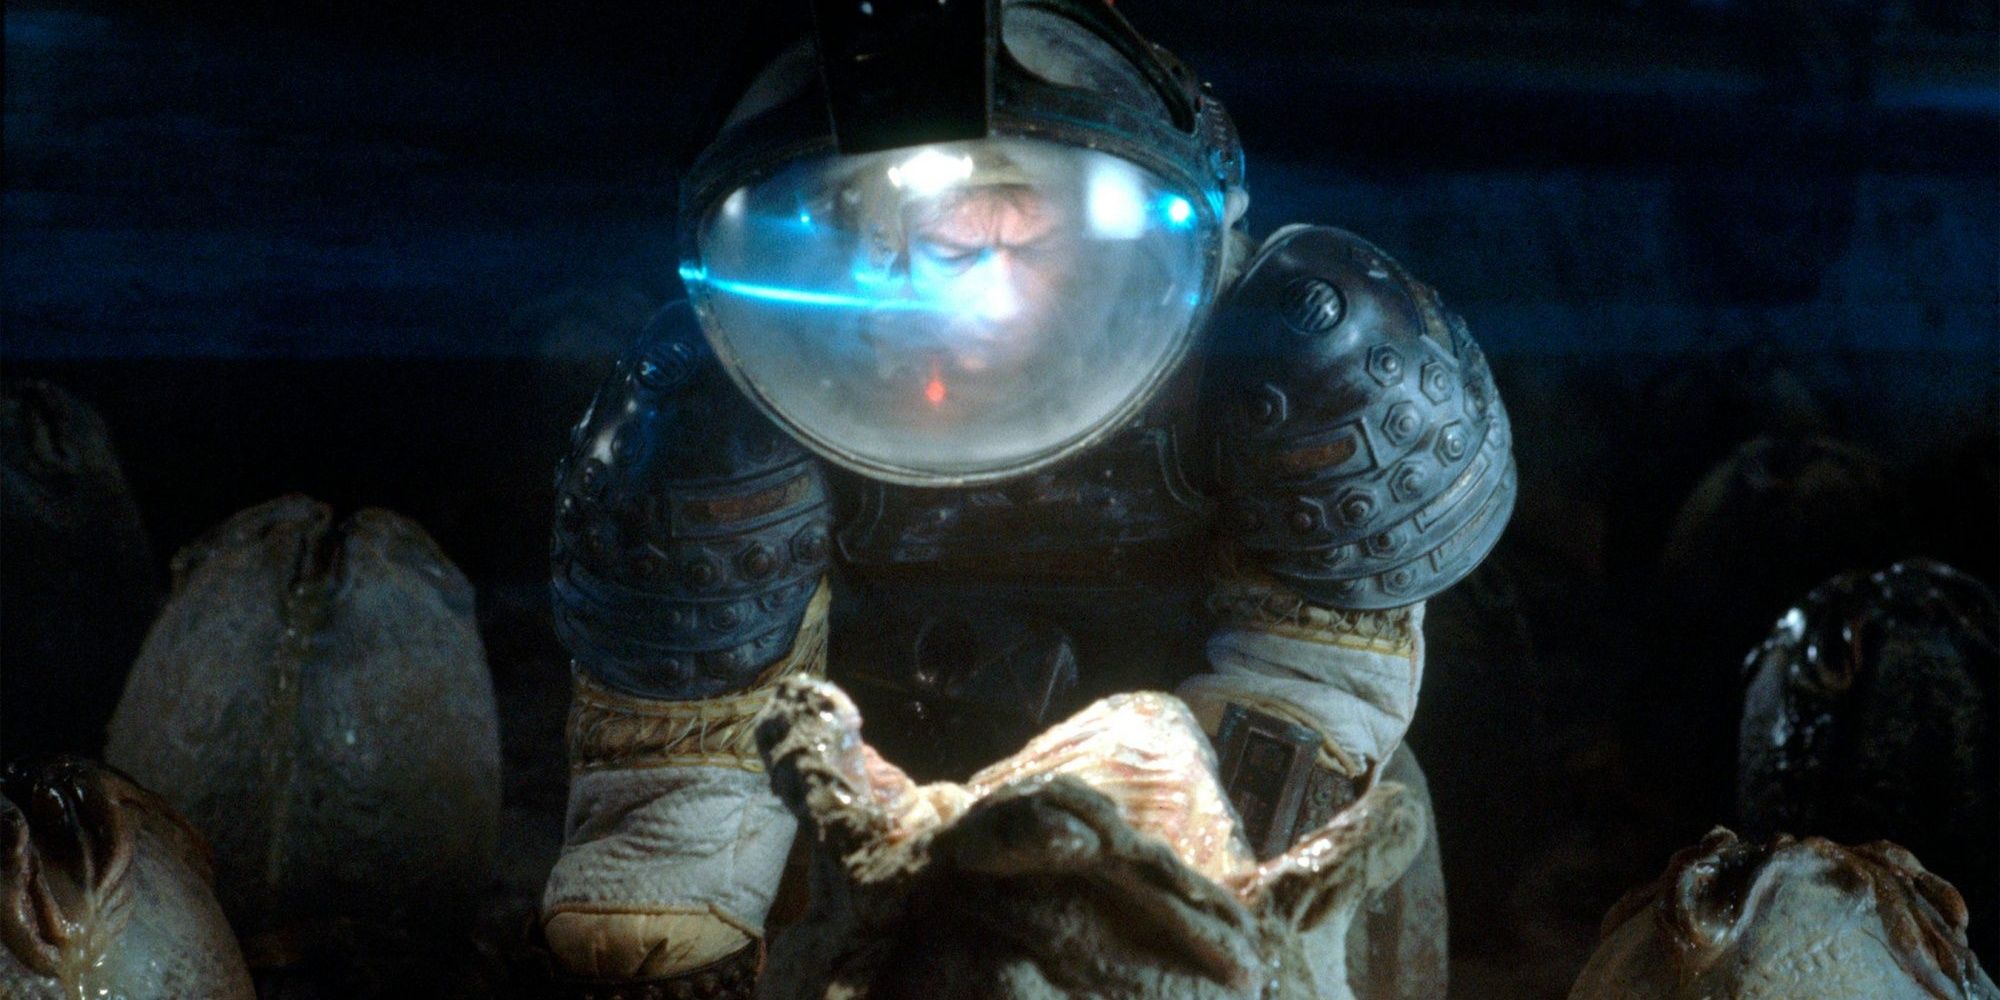 An explorer in a spacesuit looking inside an alien egg